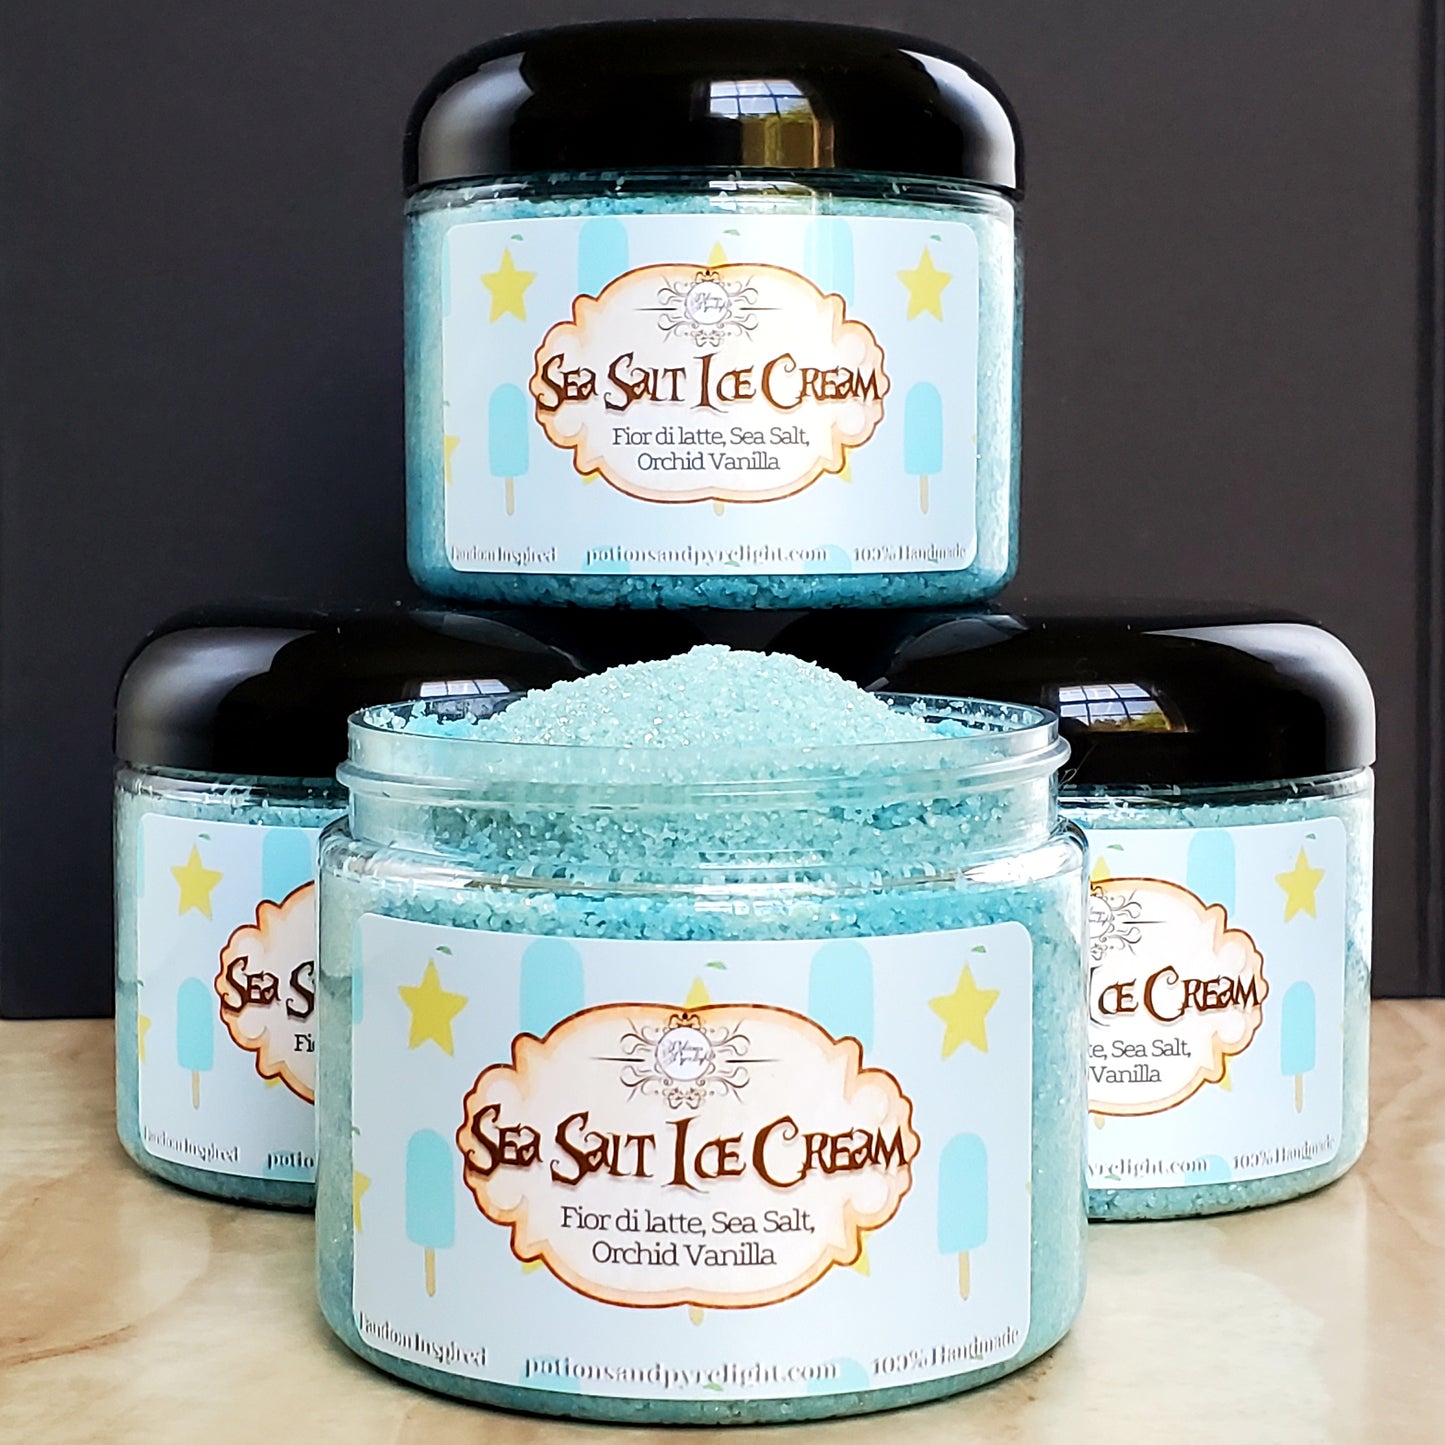 Kingdom Hearts - Sea Salt Ice Cream Exfoliating Sugar Polish (Limited Release) - Potions & Pyrelight